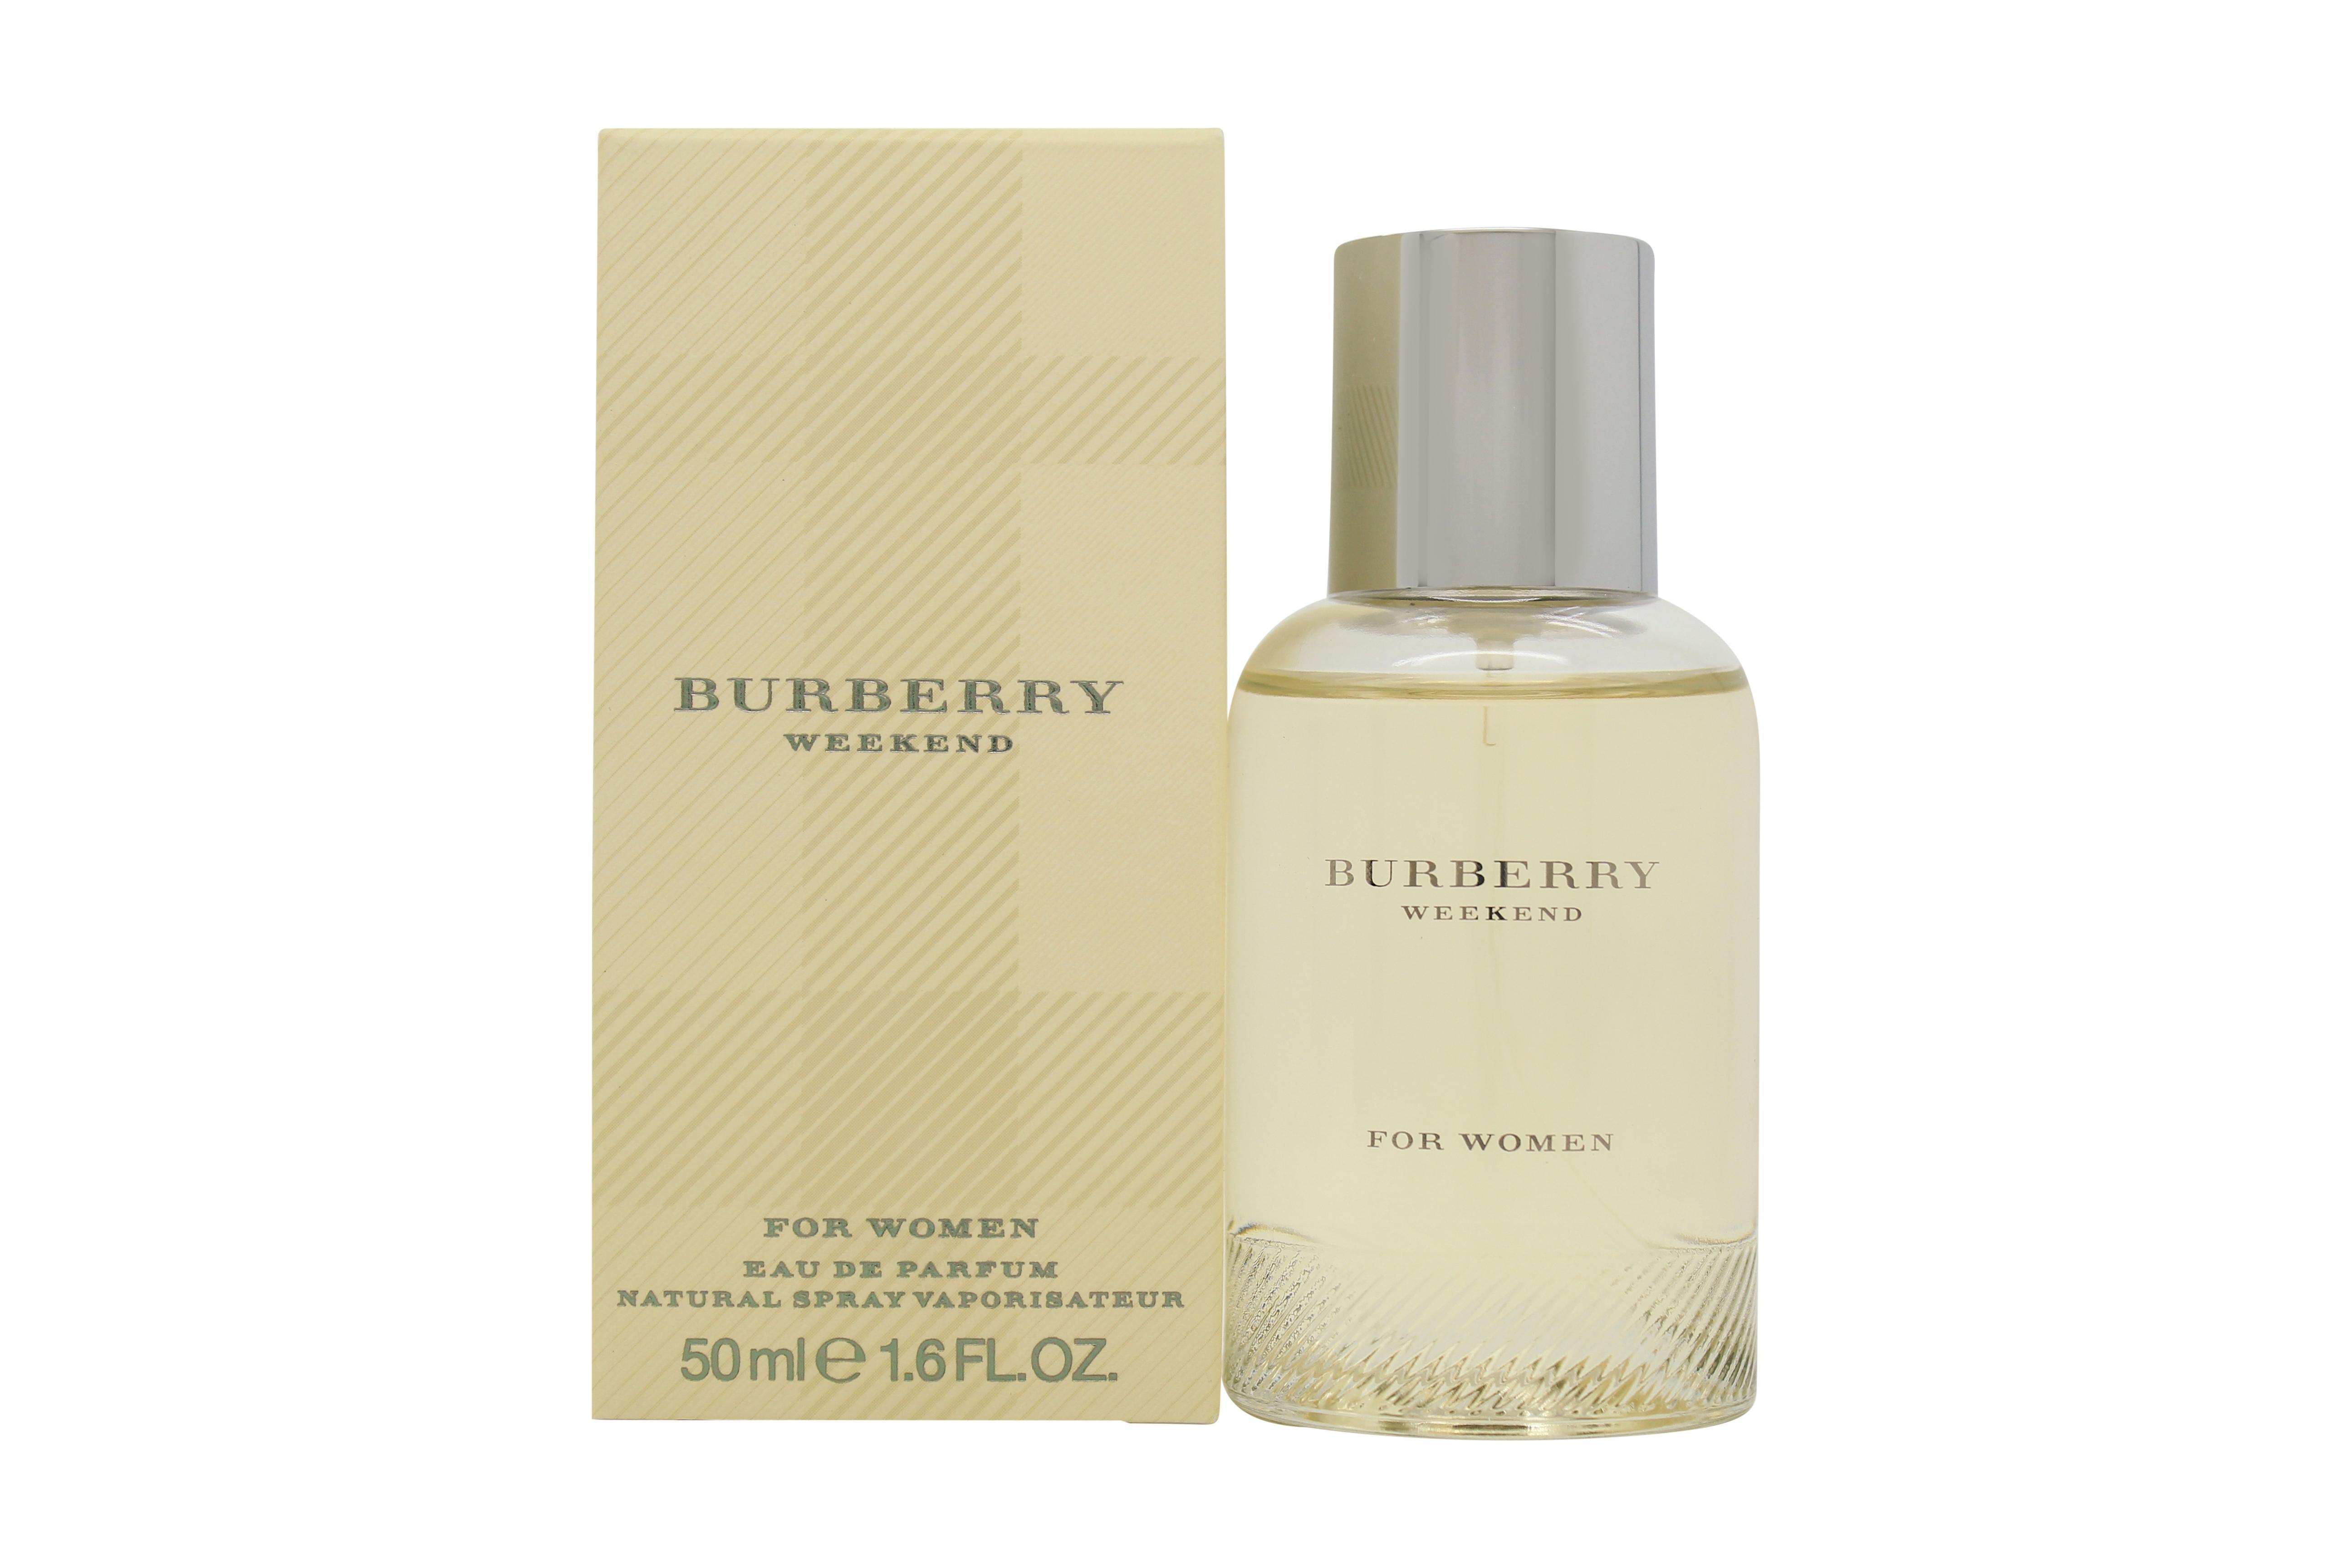 Burberry Weekend Eau de Parfum 50ml Spray